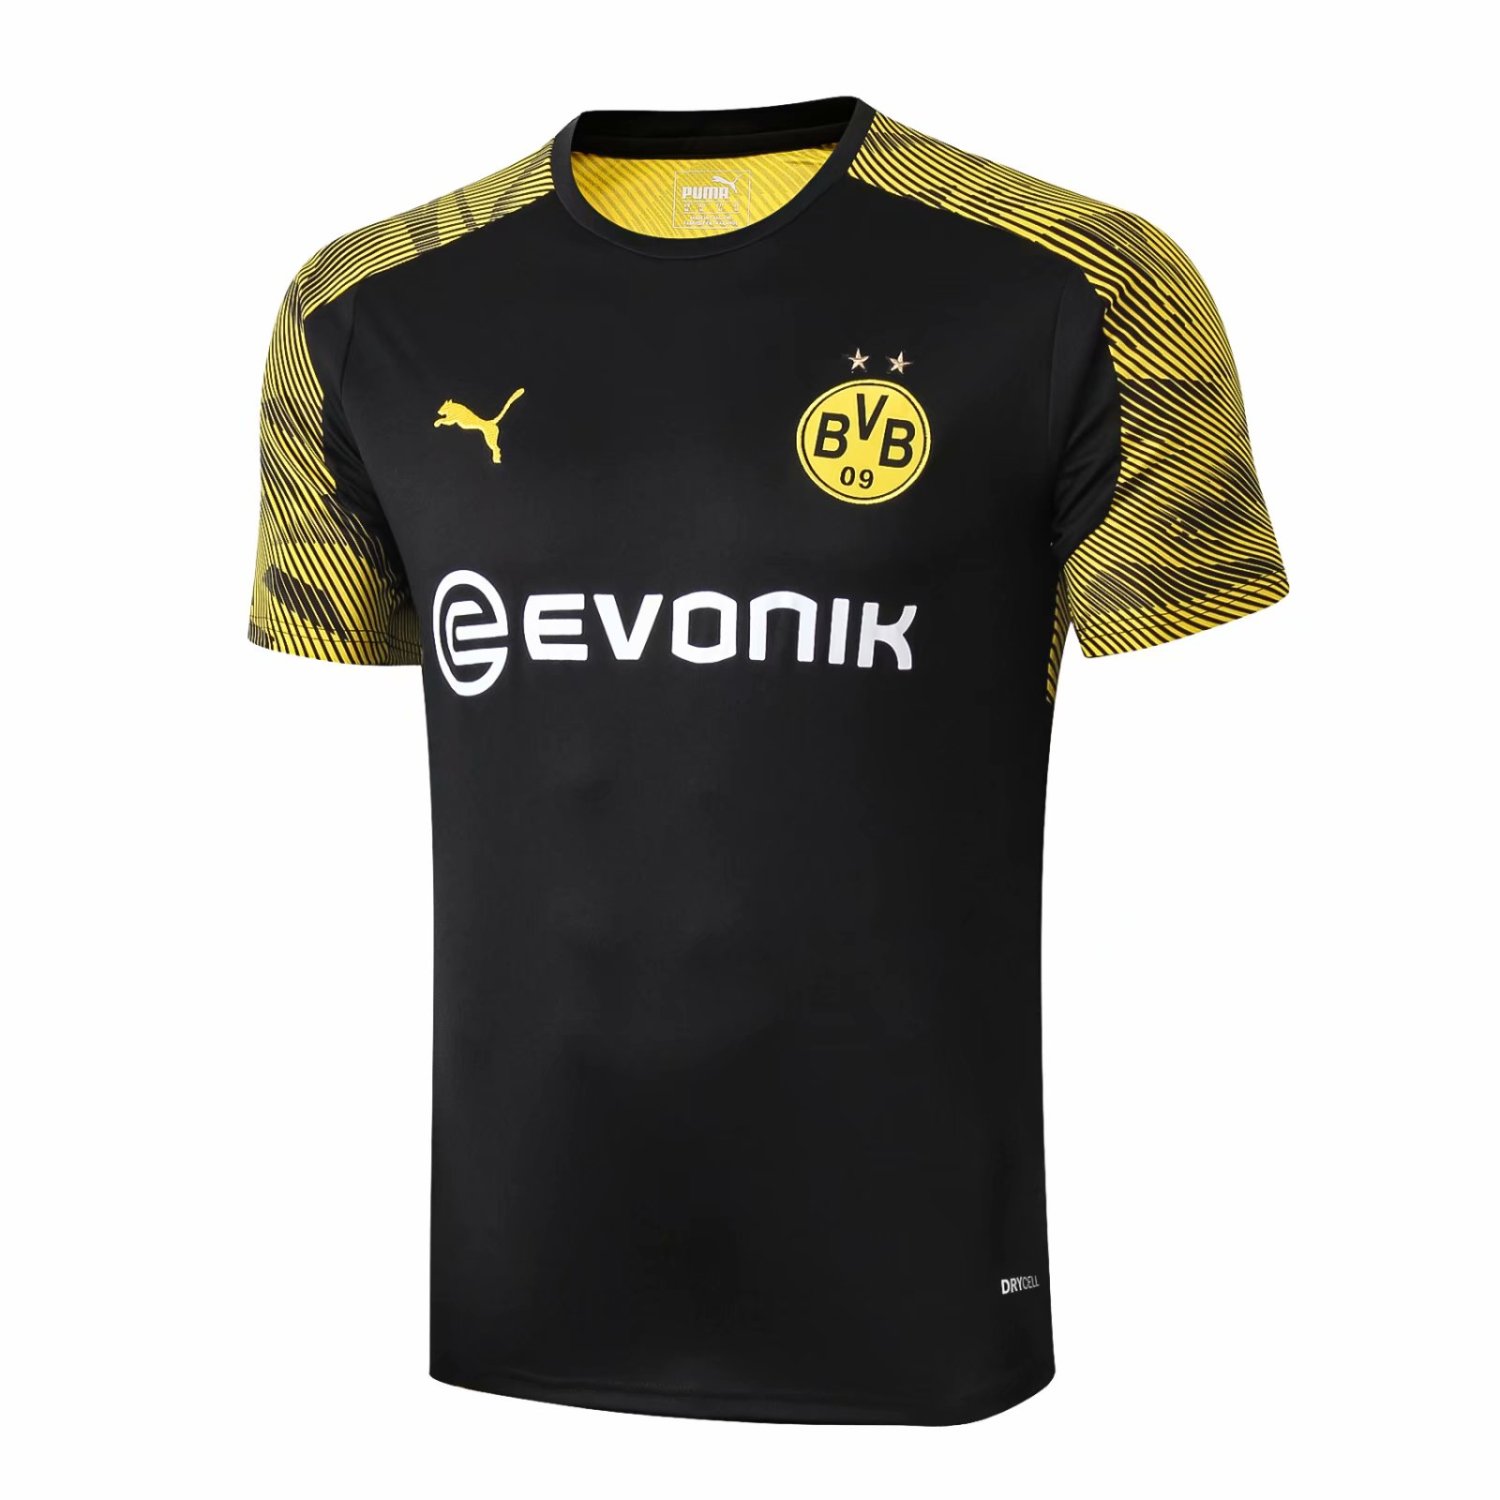 US$ 15.8 - Borussia Dortmund Short Training Black Jersey ...